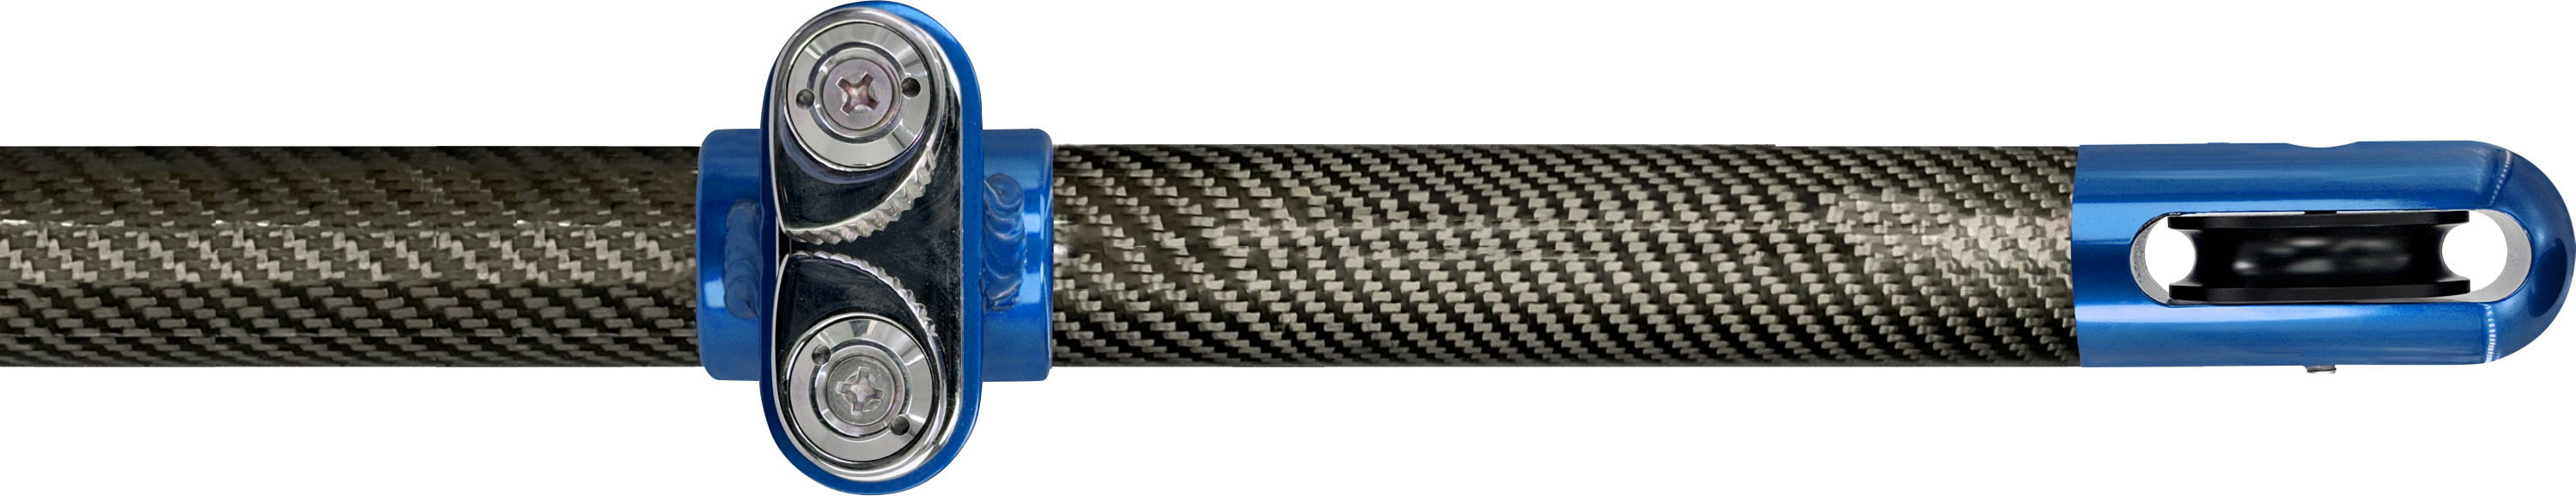 carbon fiber sunfly shade pole blue anodized